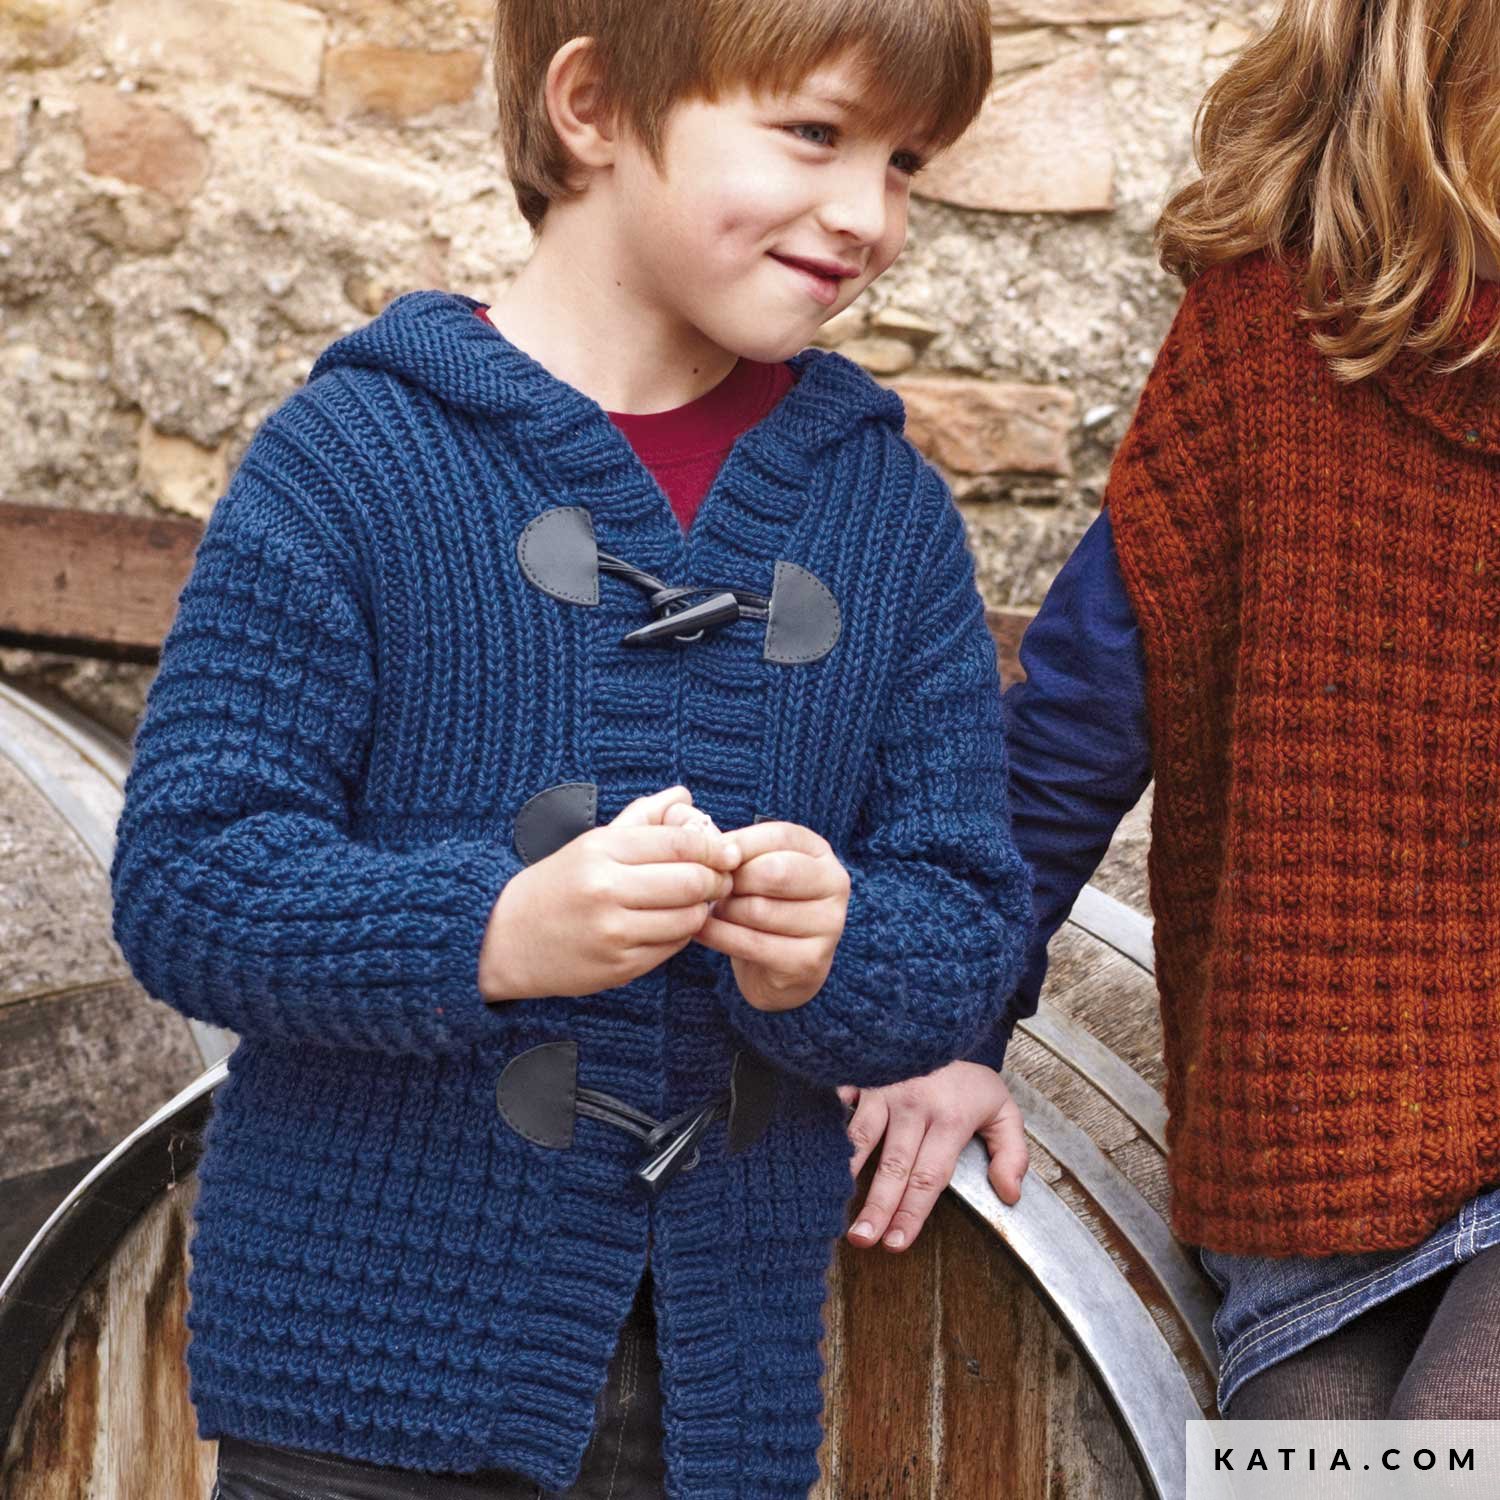 Fall to Spring Handknit long sleeve Gift Idea Children's Jacket Acrylic yarn in "Soft Blue" Cardigan for Infant Boy Age 9 to 12 mo. Kleding Jongenskleding Babykleding voor jongens Truien 